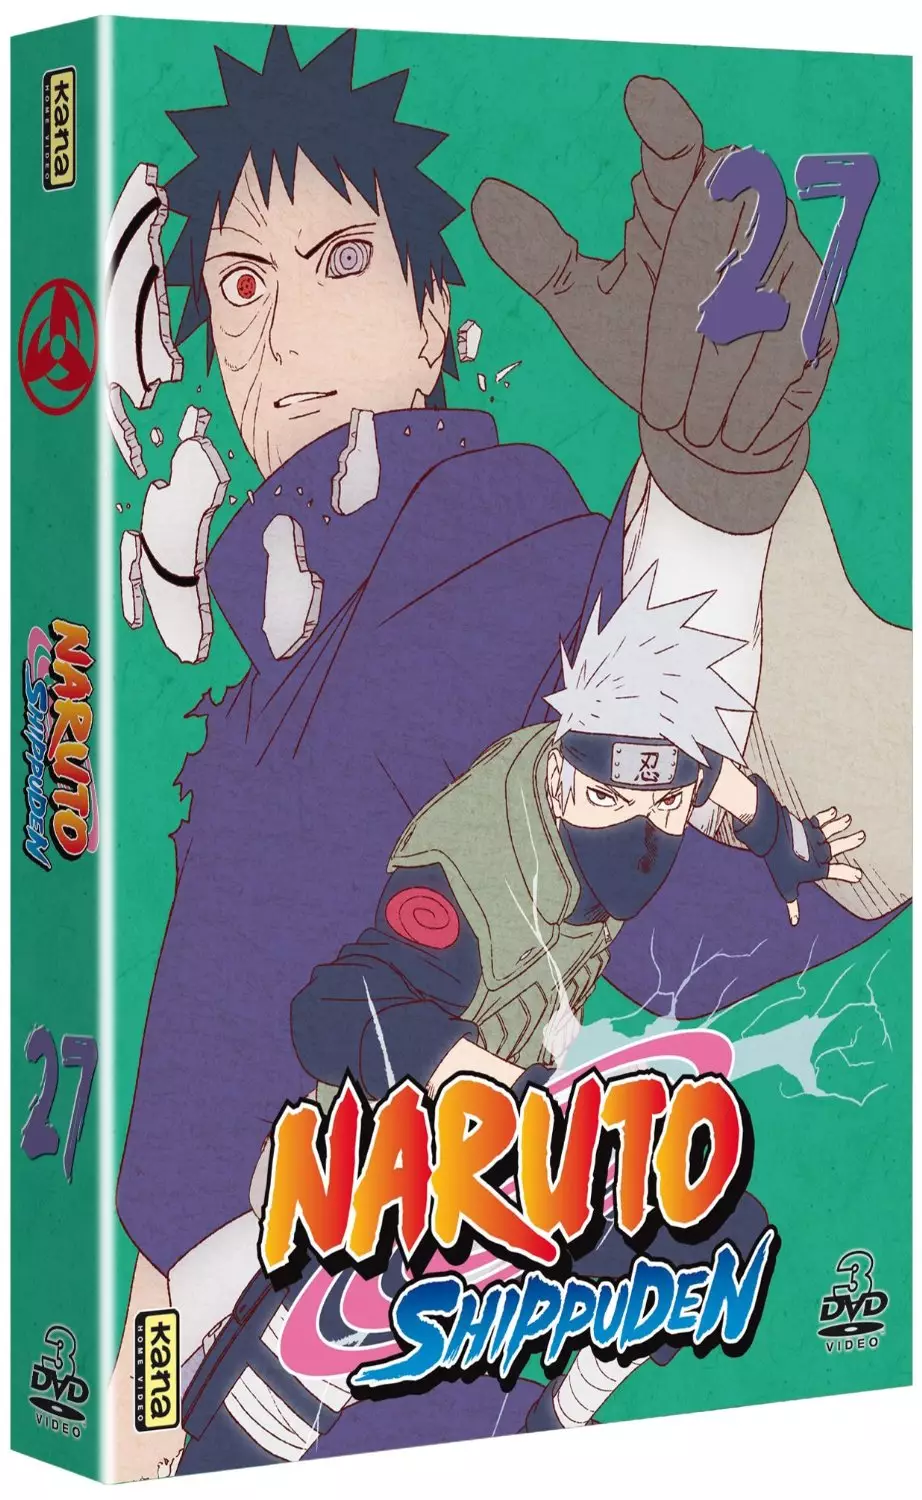 Naruto Shippuden - Coffret Vol.27